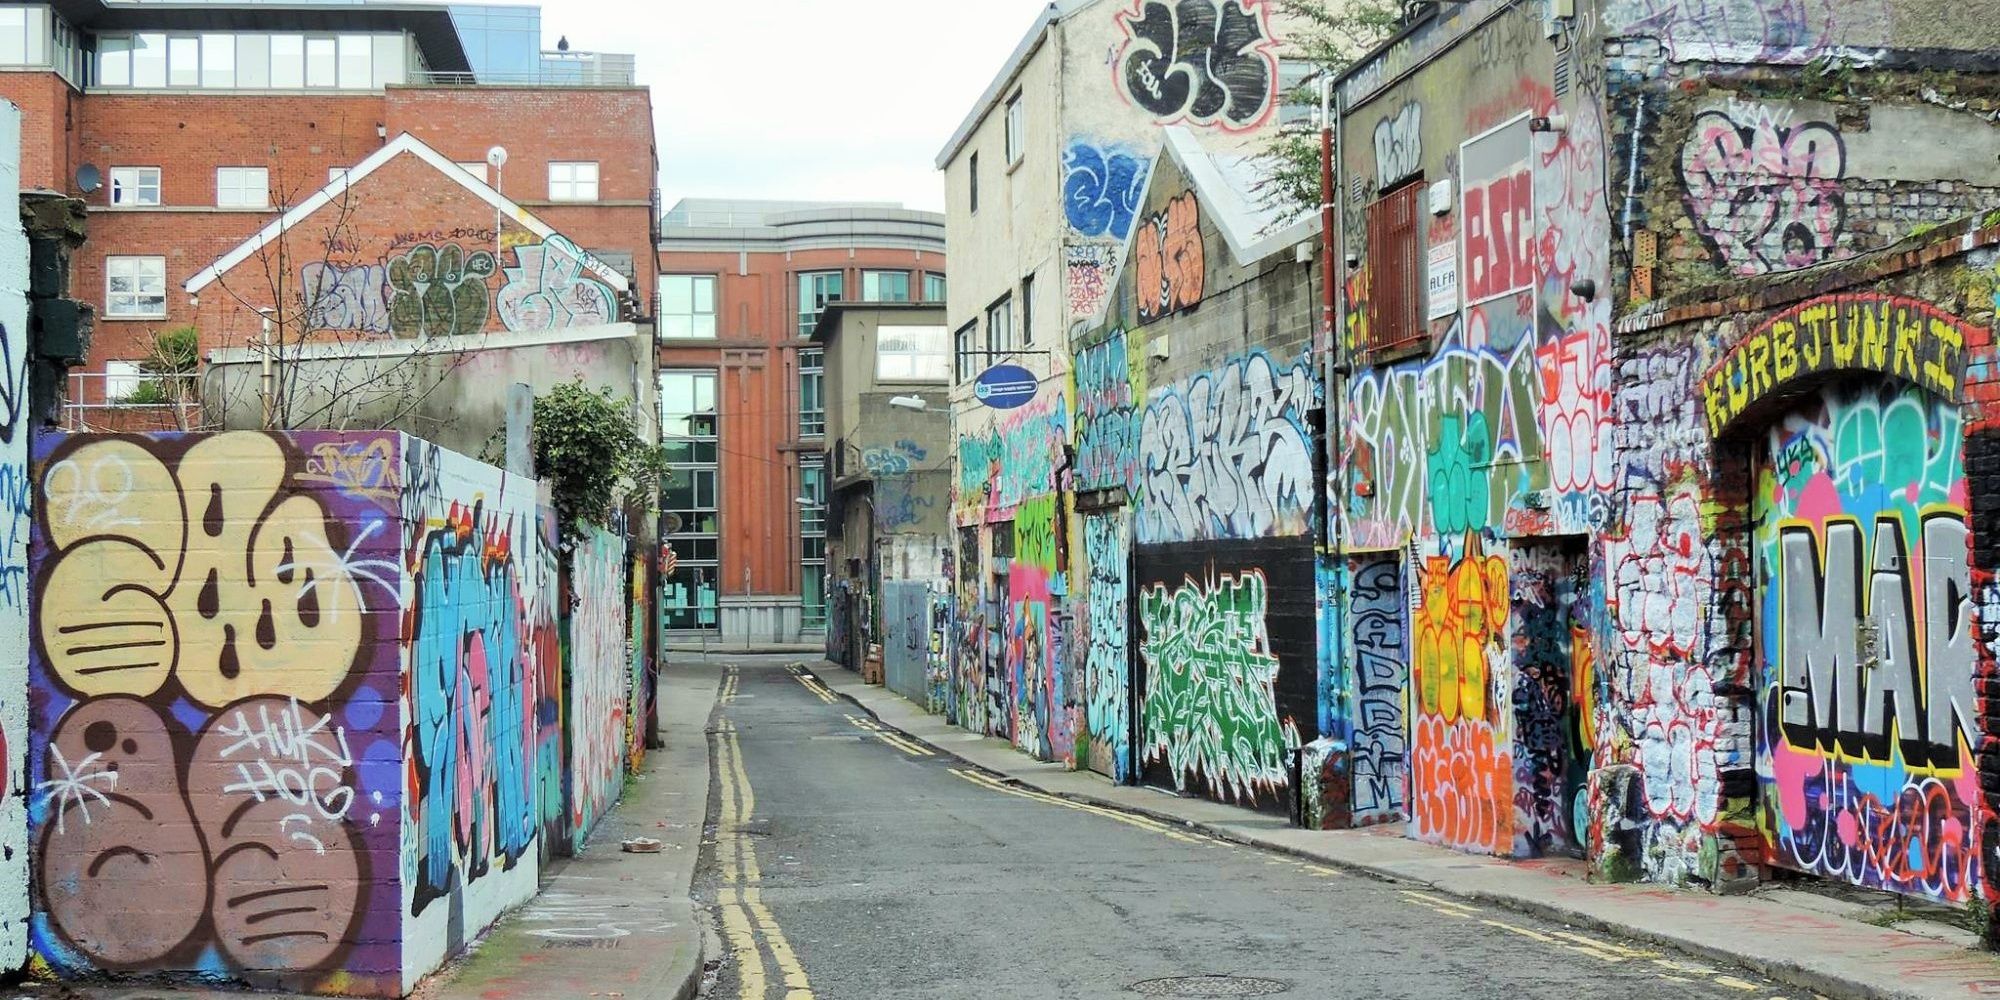 A street of Dublin depicting various pieces of graffiti